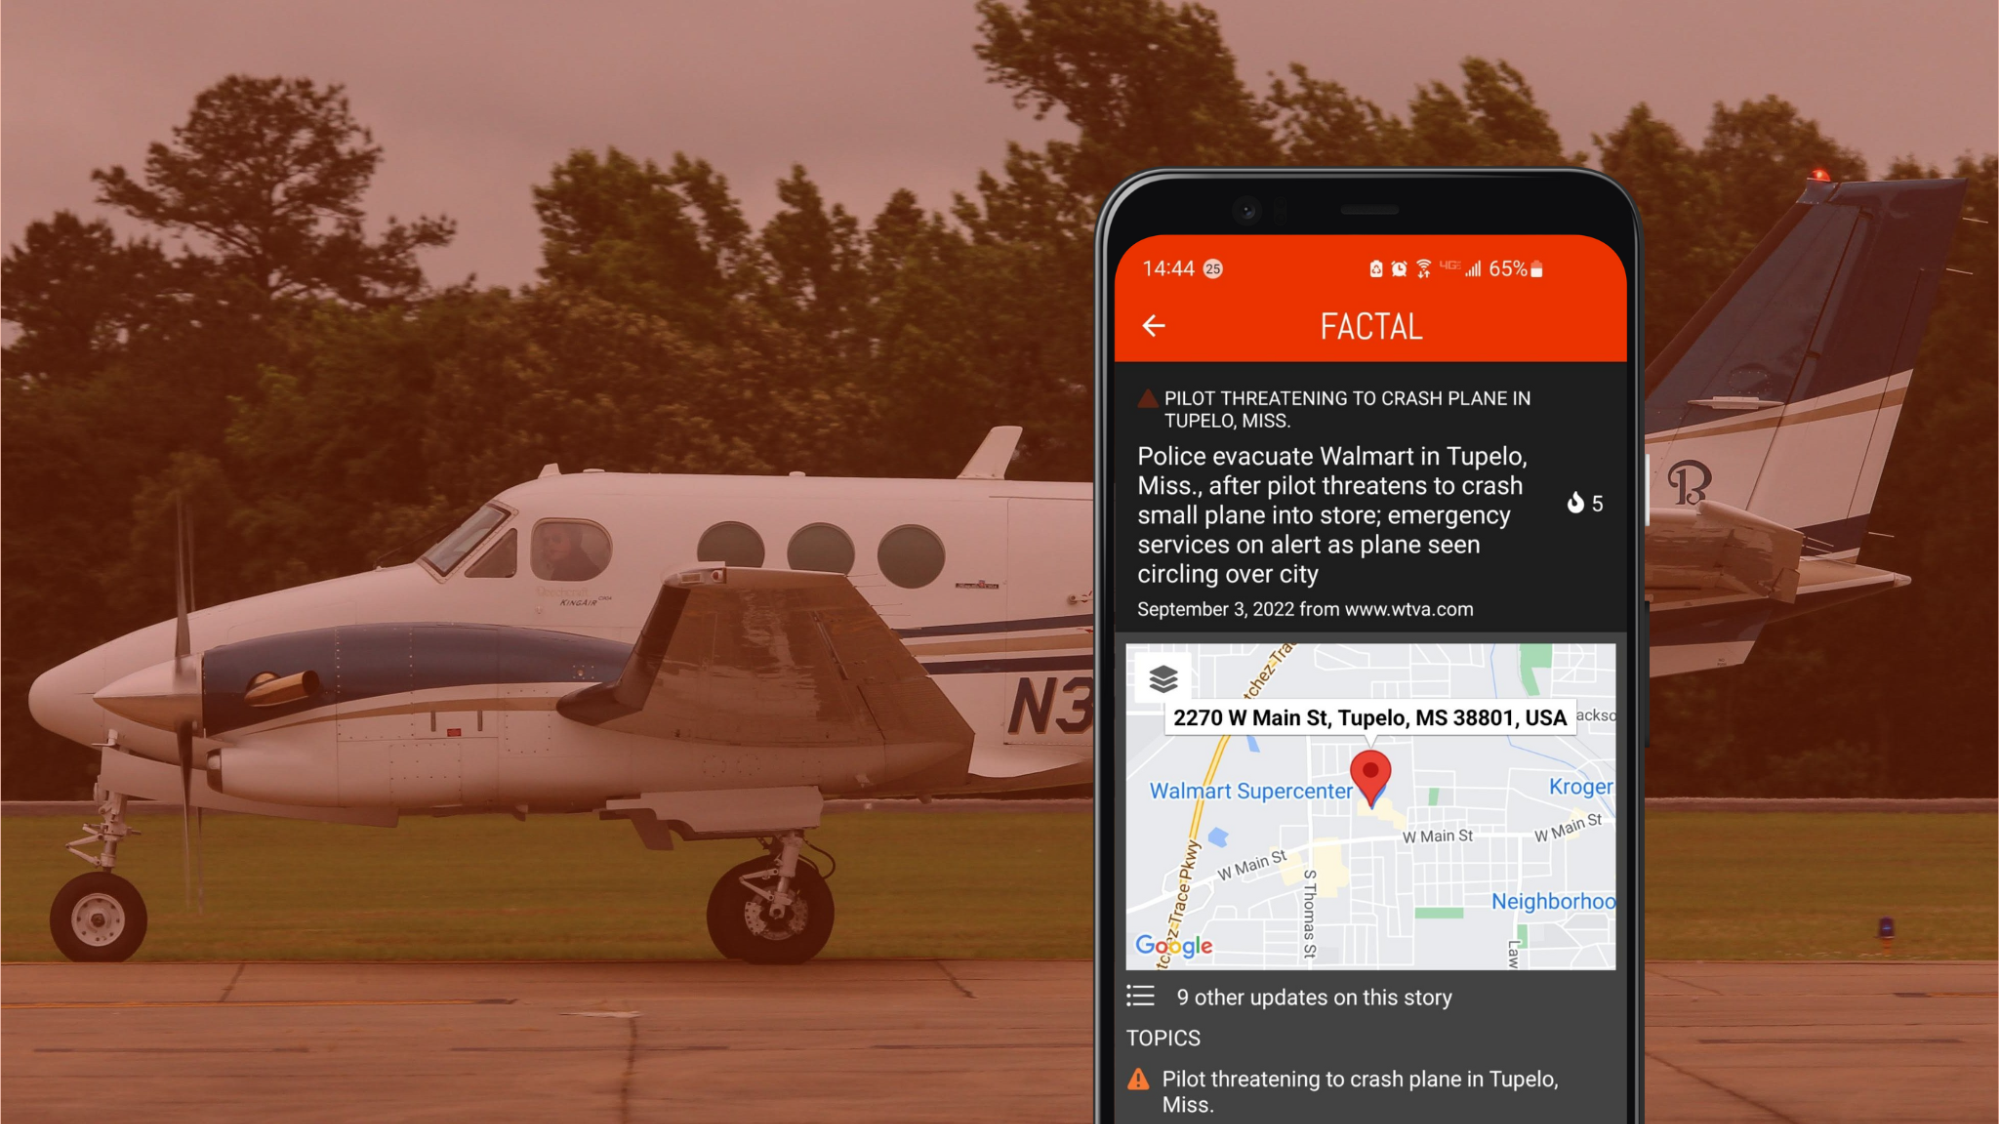 (Photo source: composite of FlightAware image and Factal app screenshot)